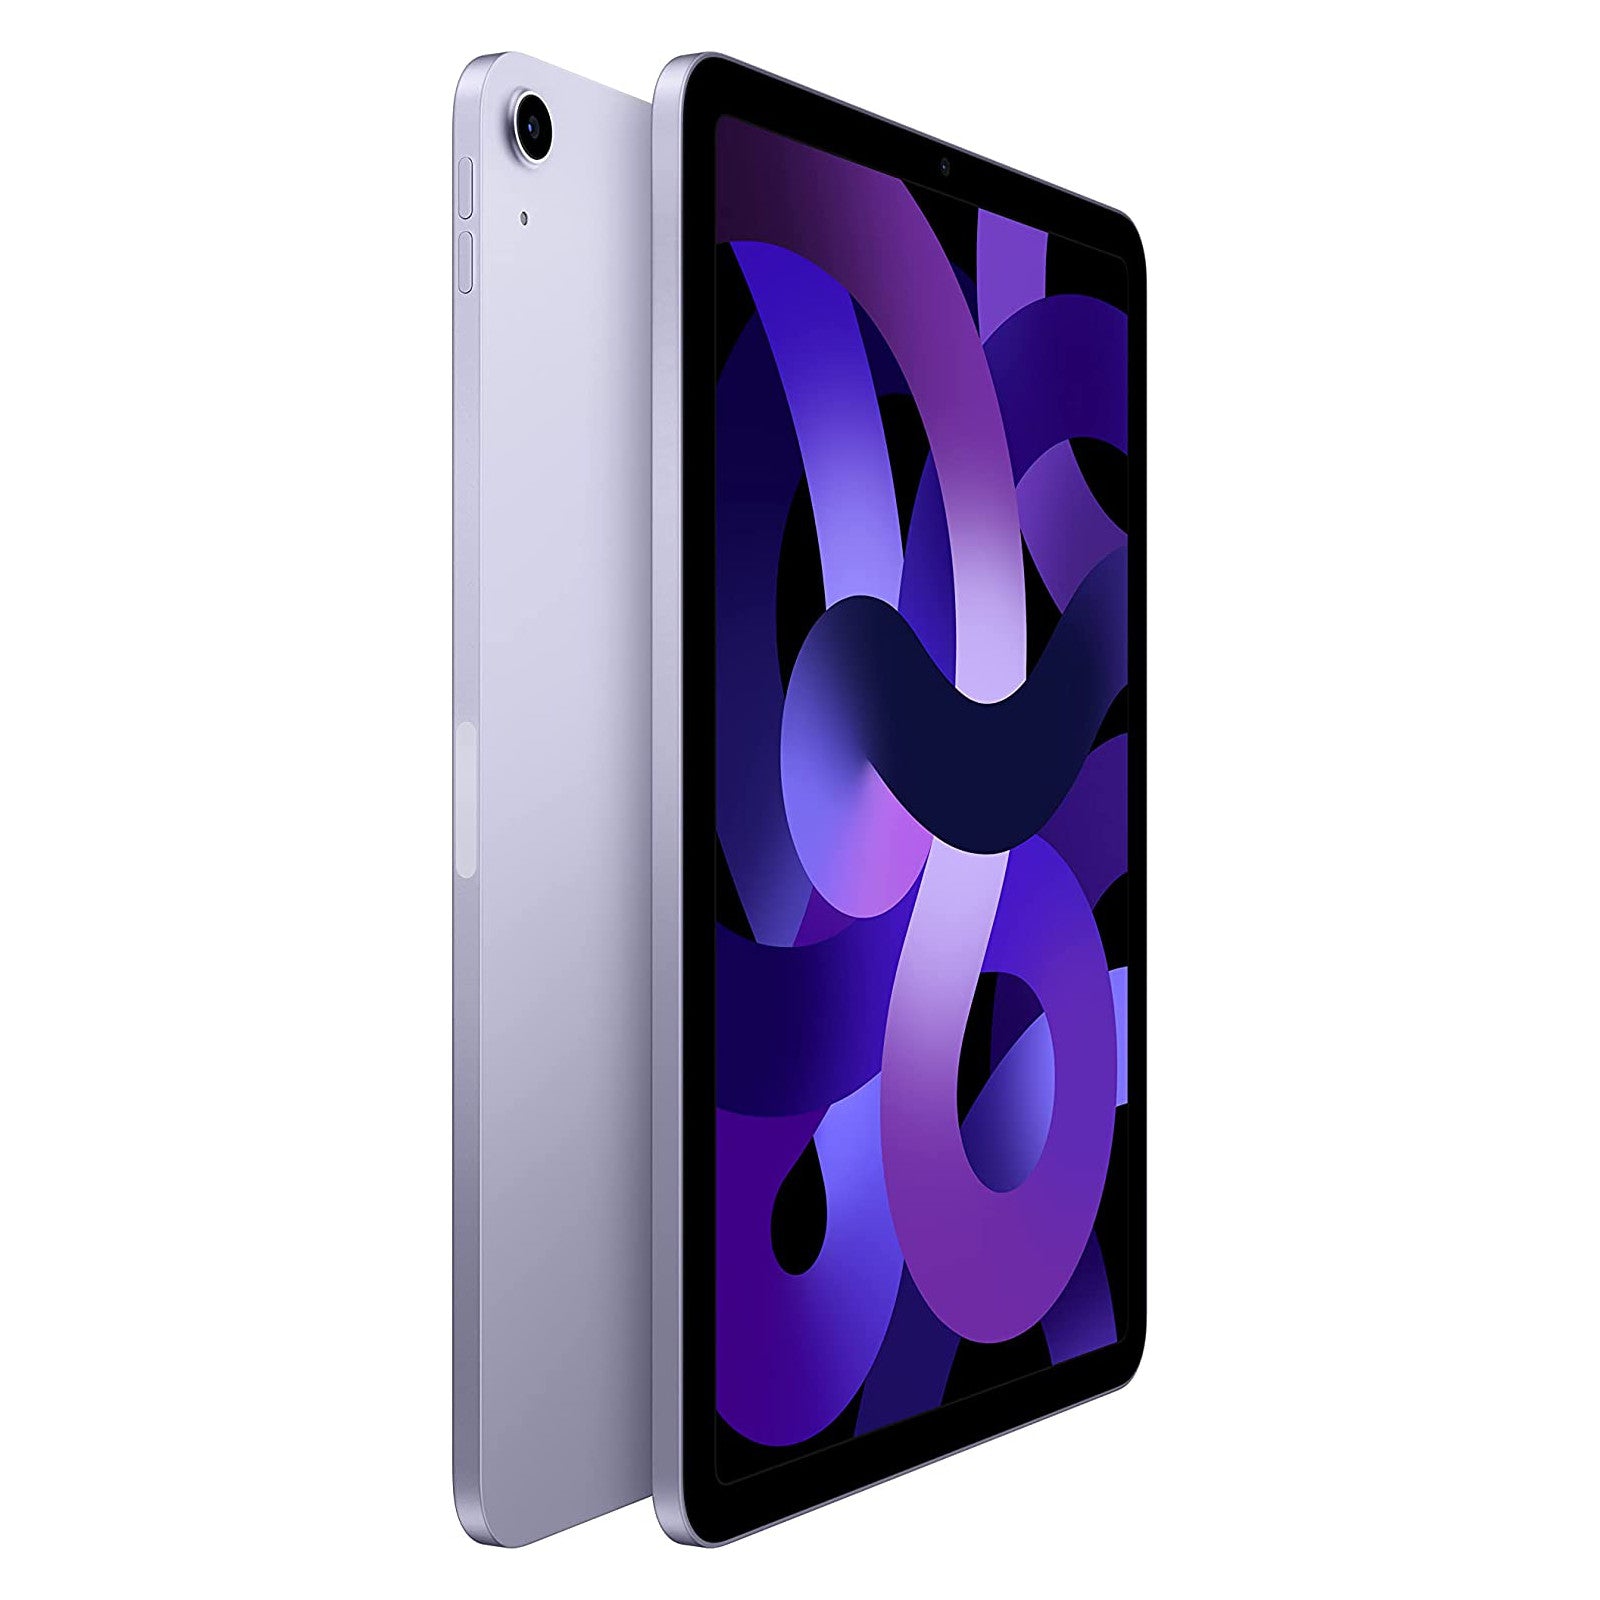 iPad Air 5 64GB WiFi & Cellular in Purple - Good condition